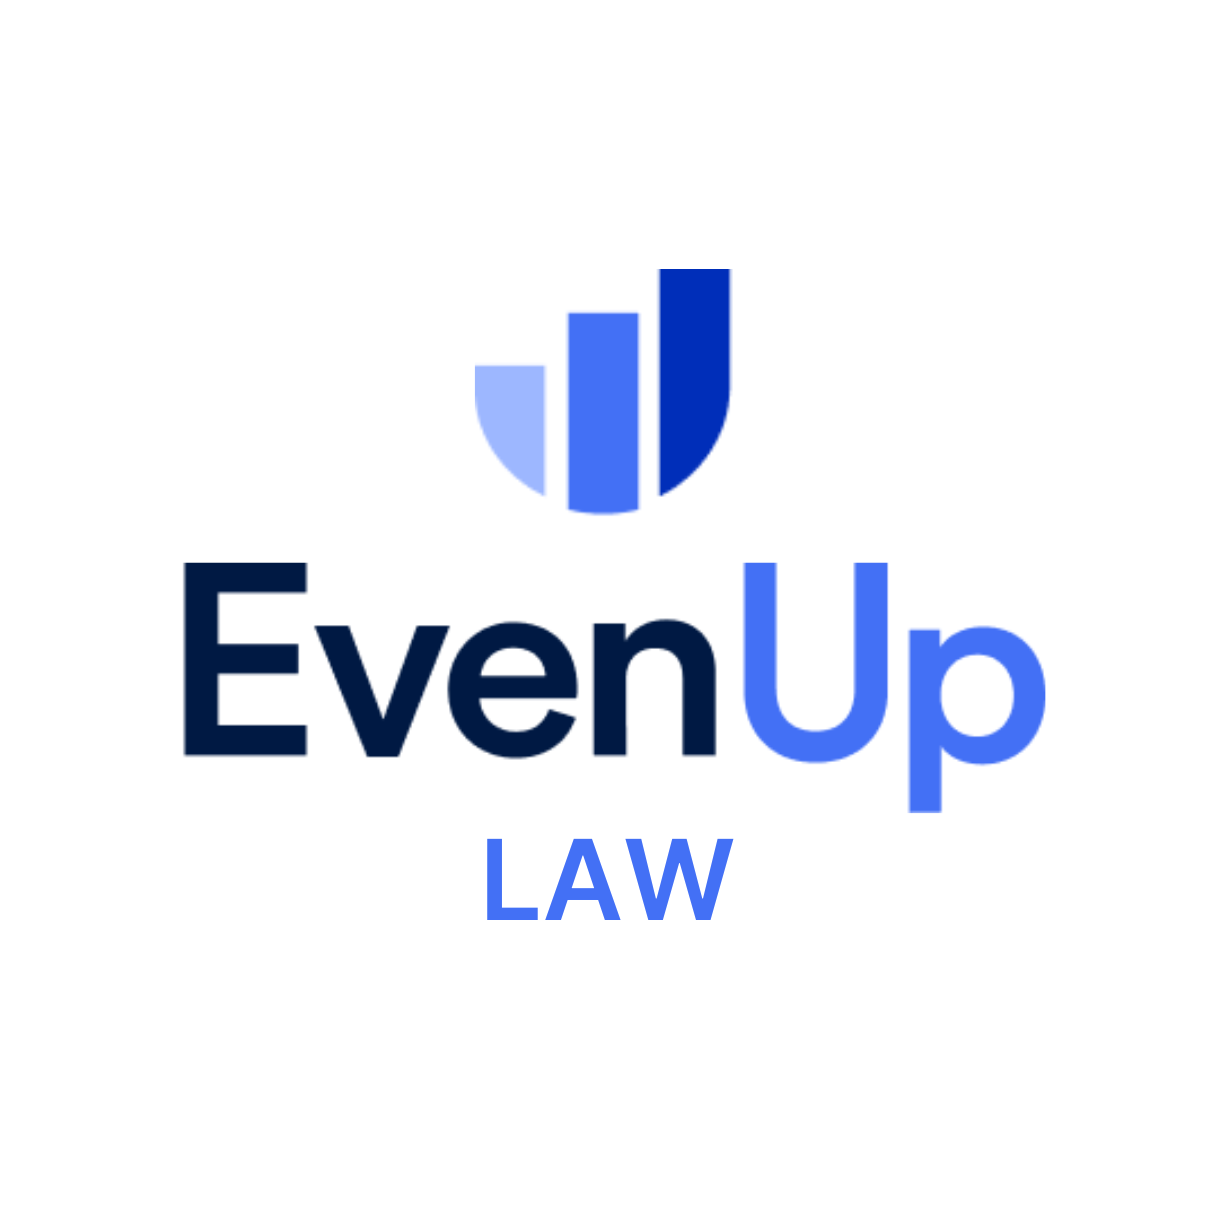 EvenUp - Crunchbase Company Profile & Funding